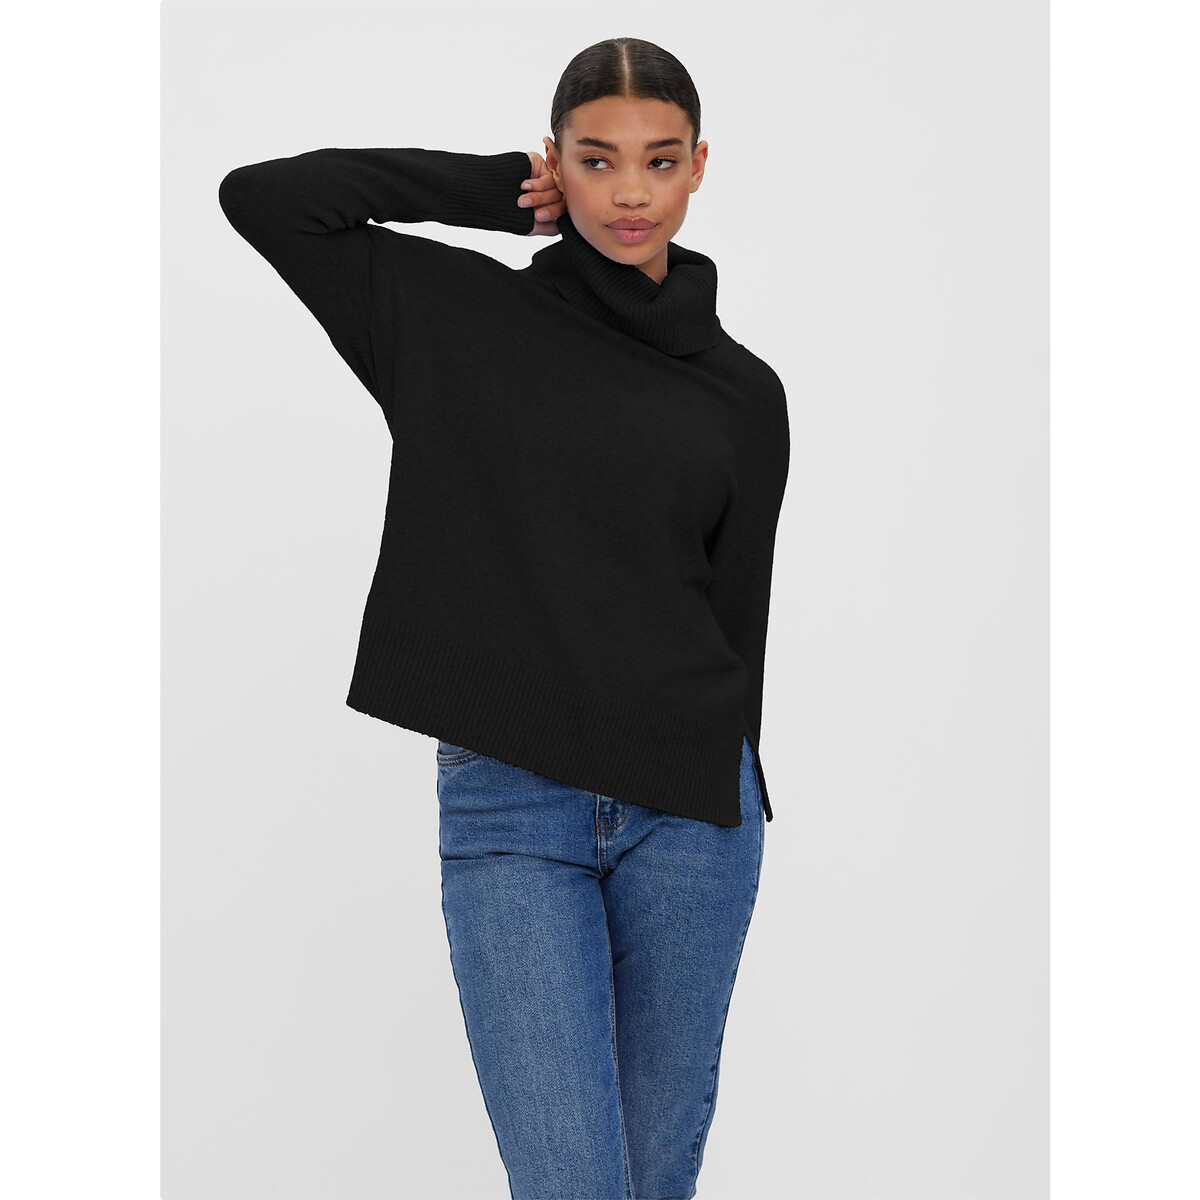 Пуловер с высоким воротником из тонкого трикотажа XS черный пуловер с высоким воротником из трикотажа с витым узором